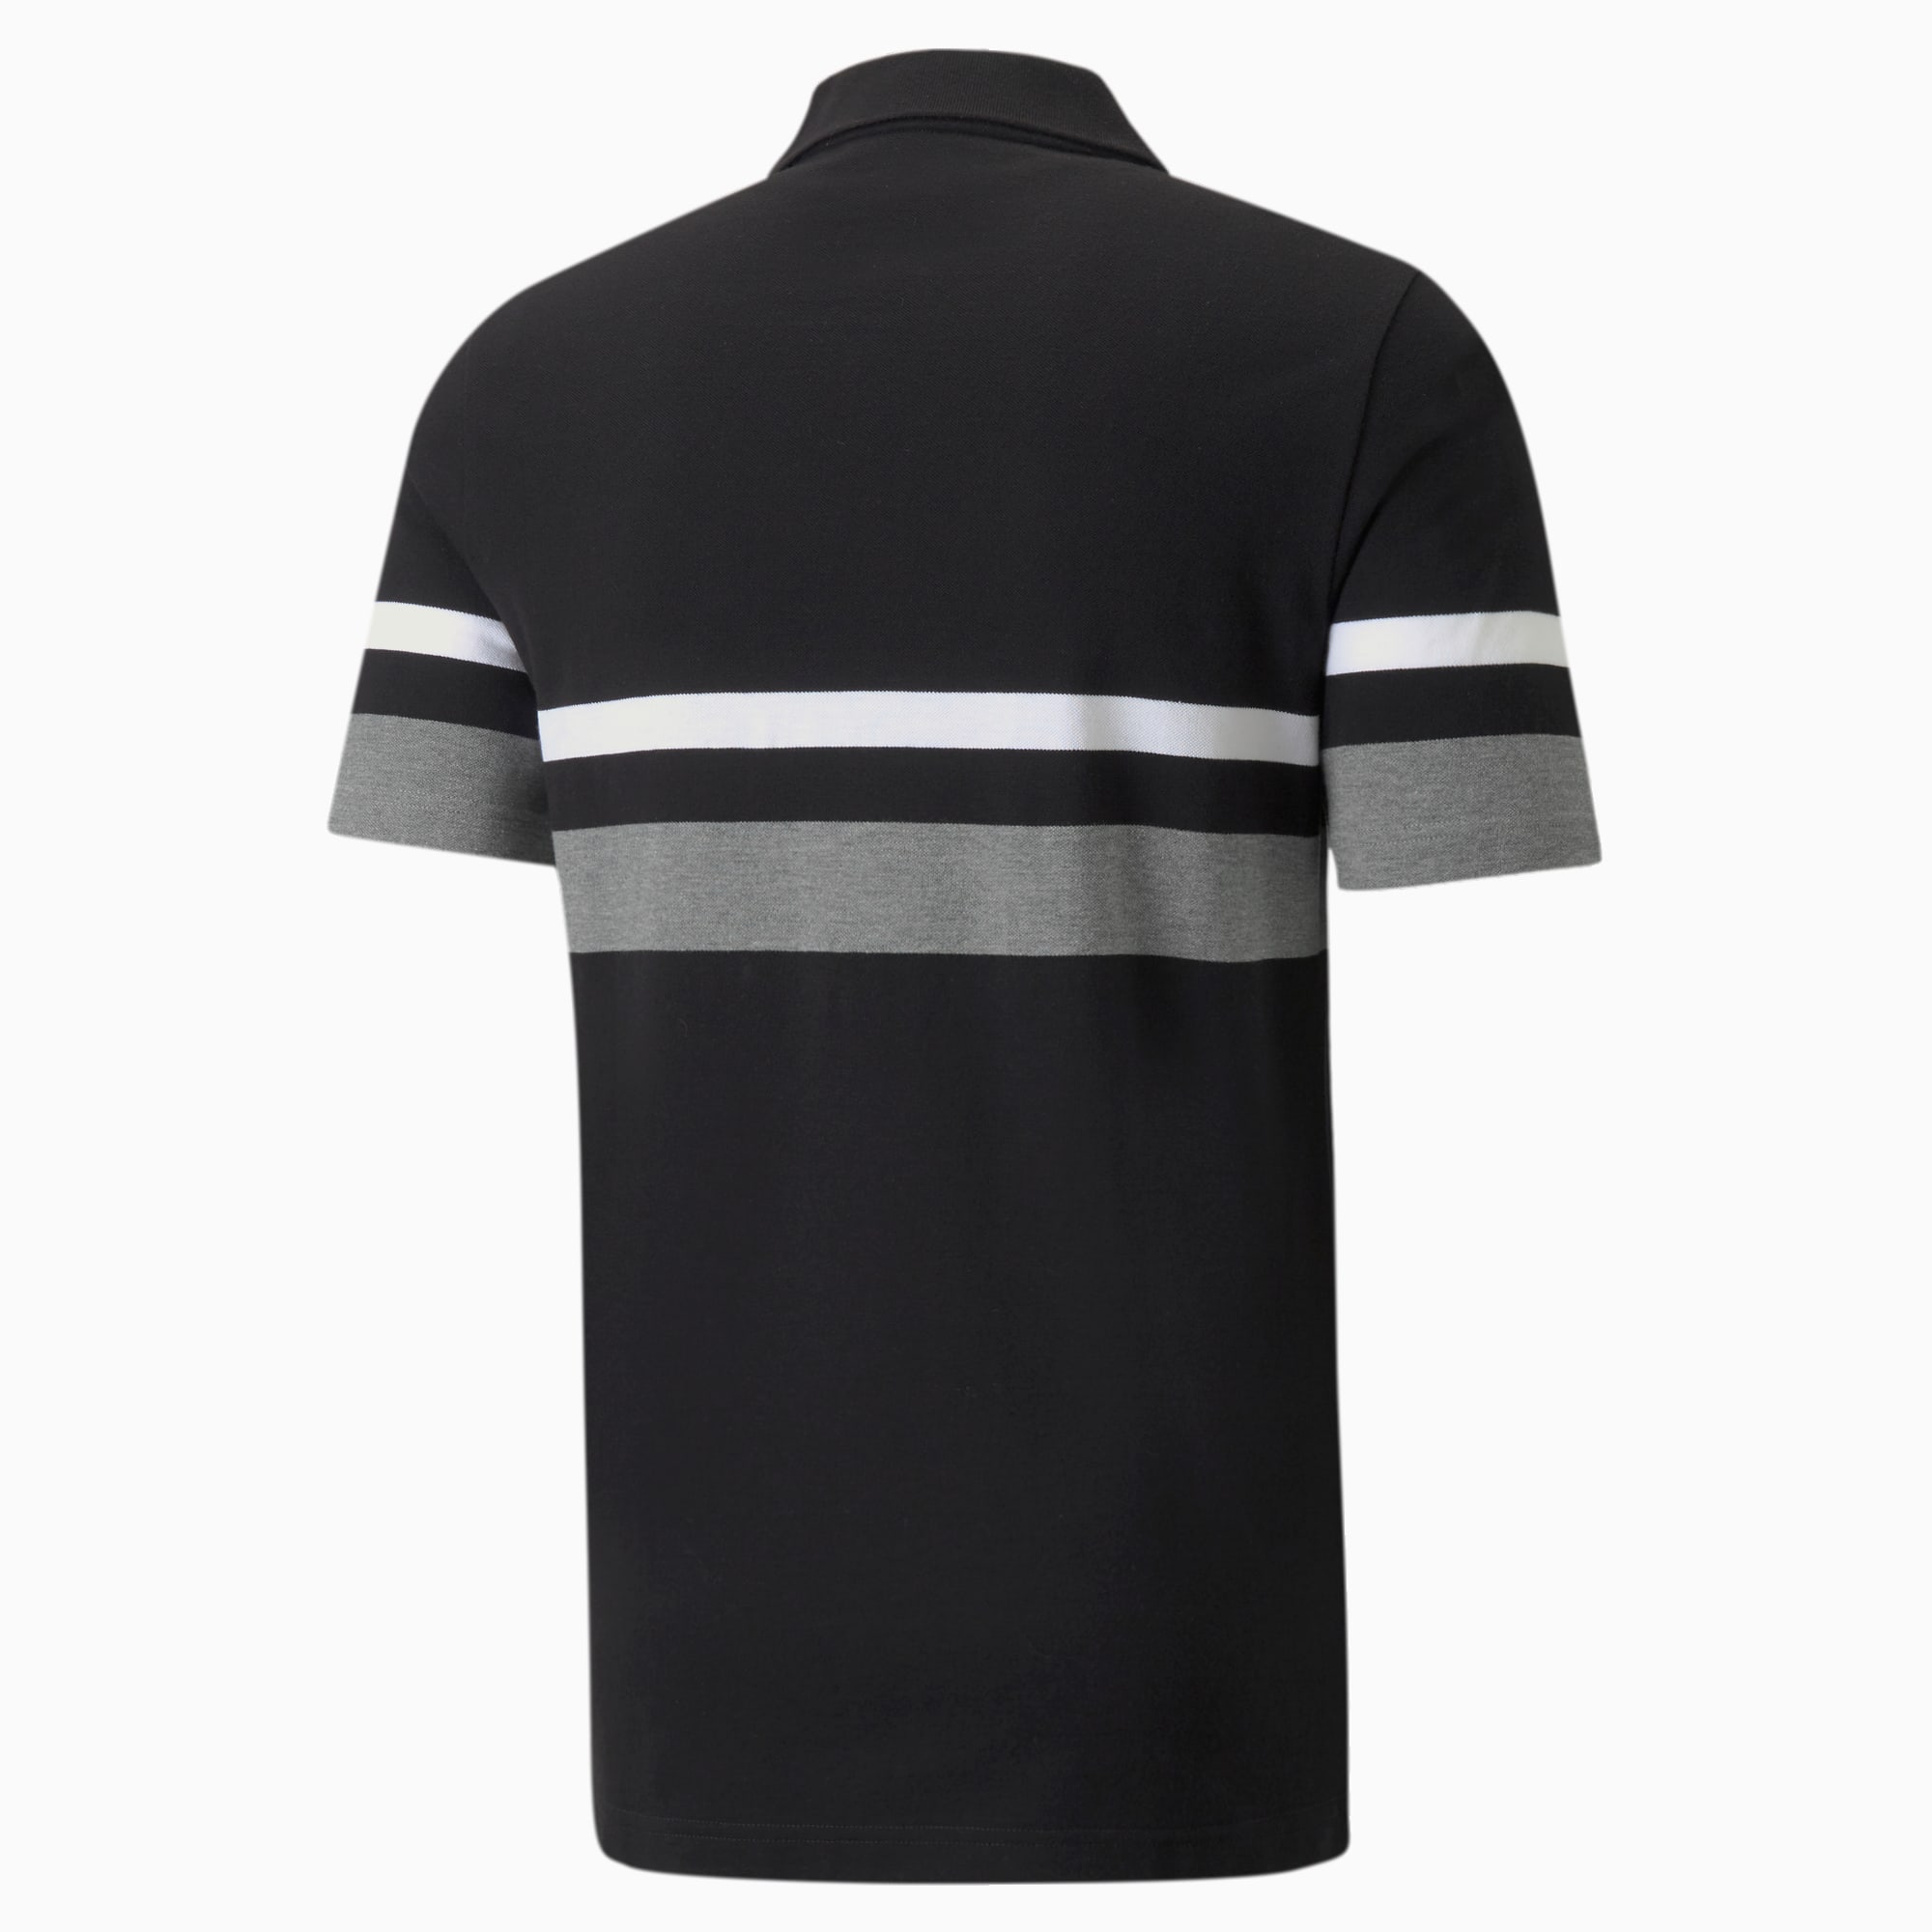 PUMA Essentials Stripe Men's Polo Shirt, Black, Size S, Clothing